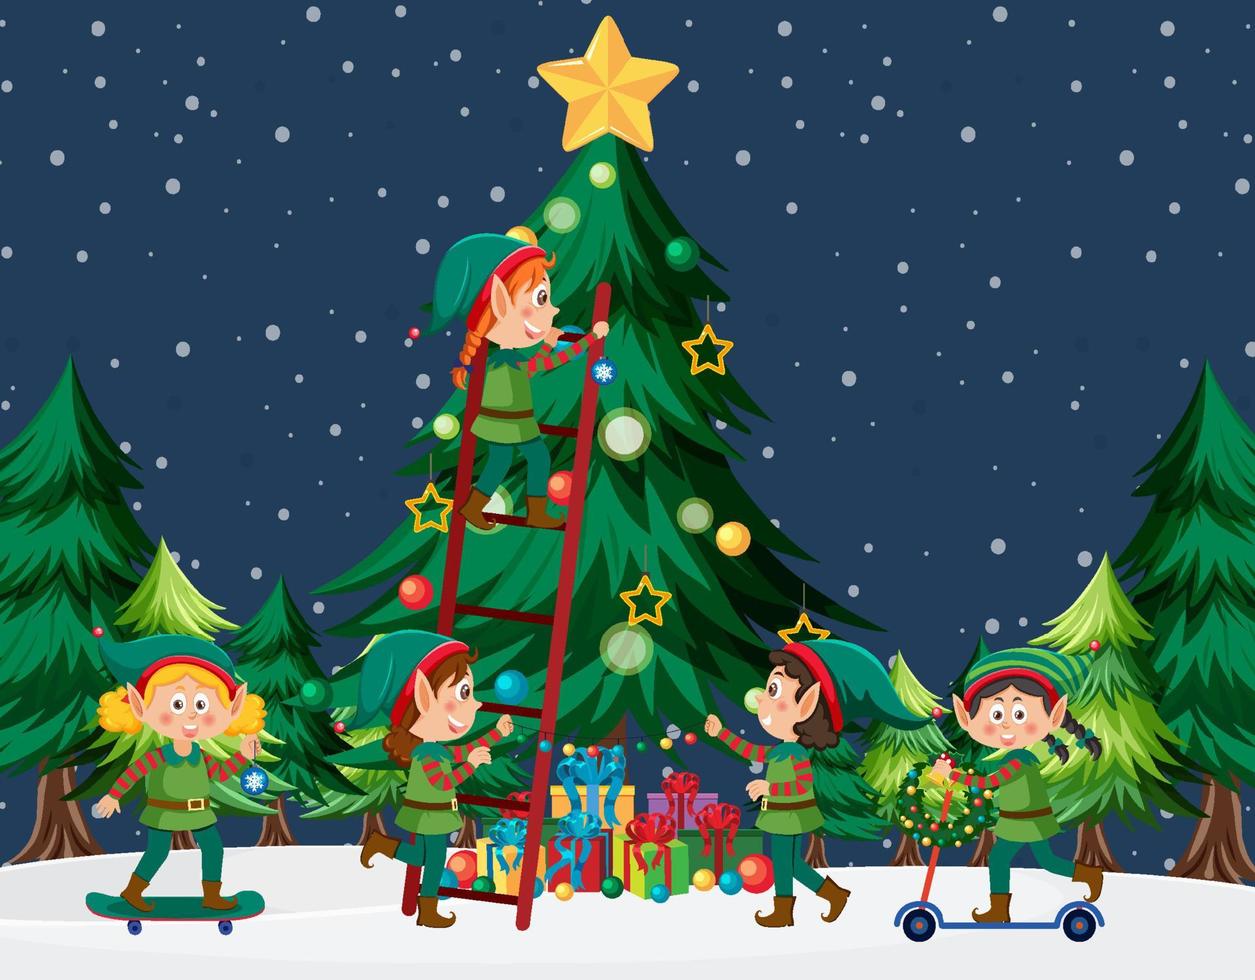 Children in elf costume decorating Christmas tree vector